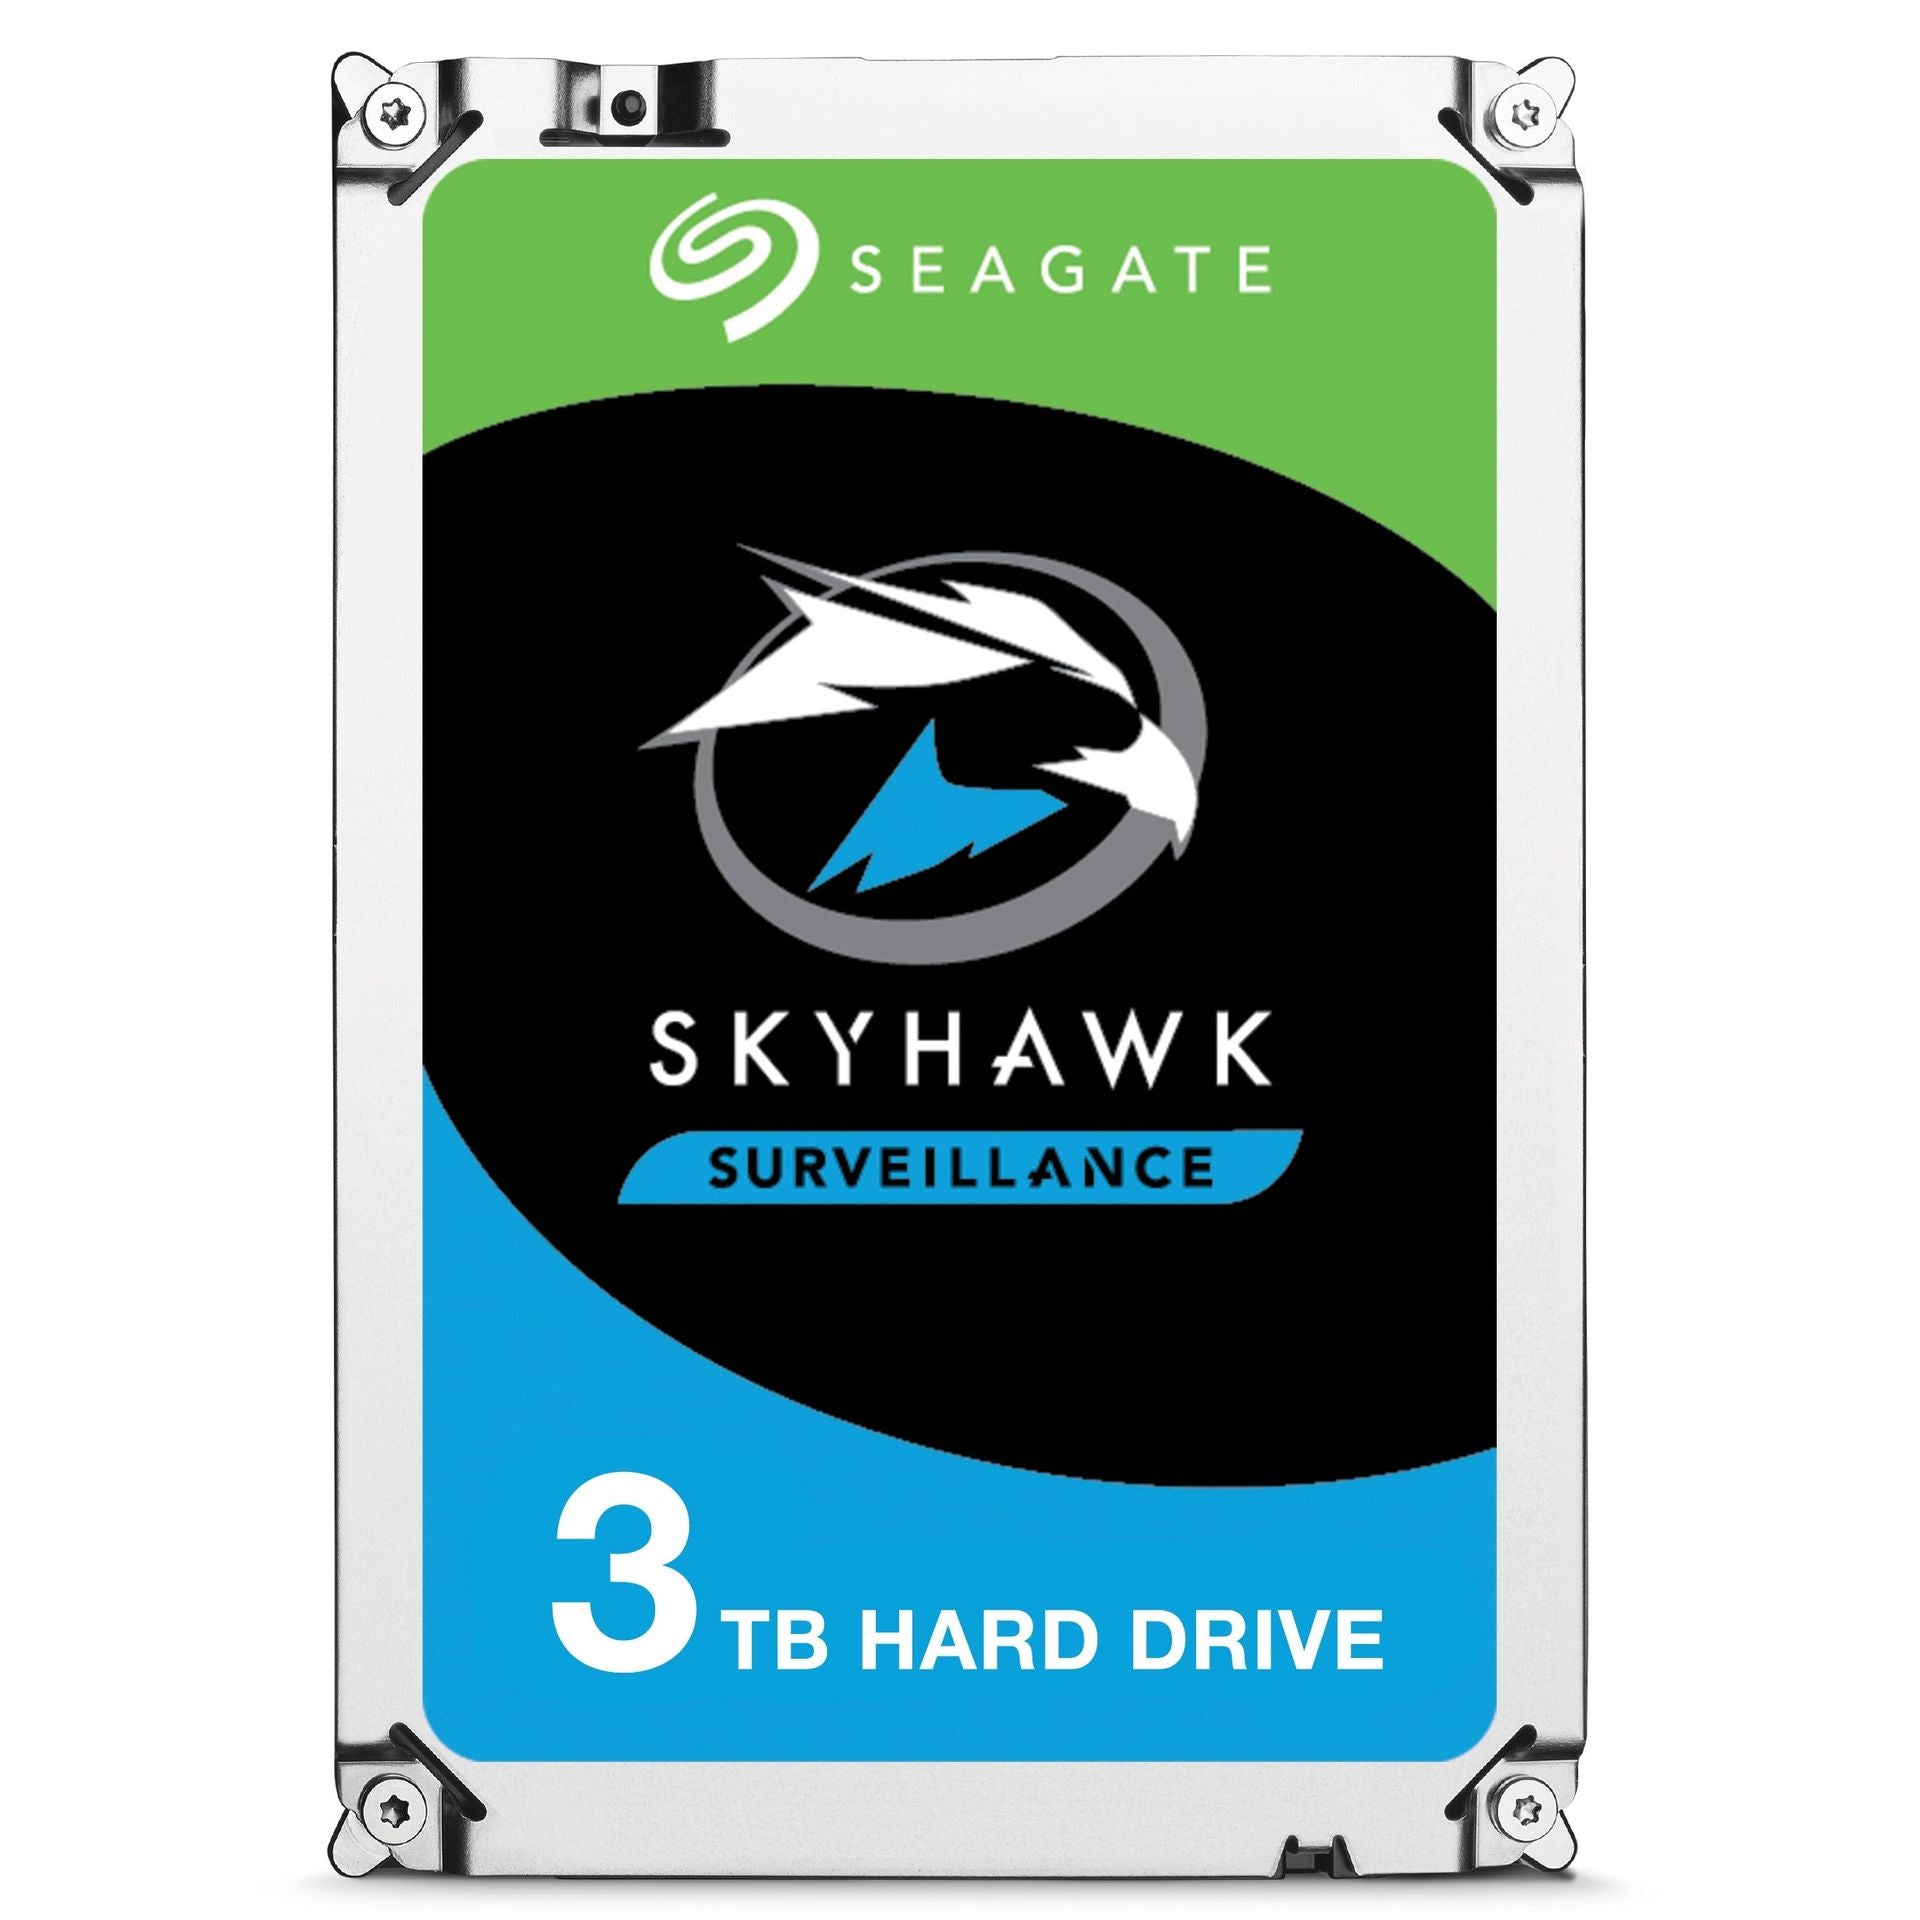 Seagate SkyHawk 3TB Internal Hard Drive 3.5"Serial ATA III PN ST3000VX009